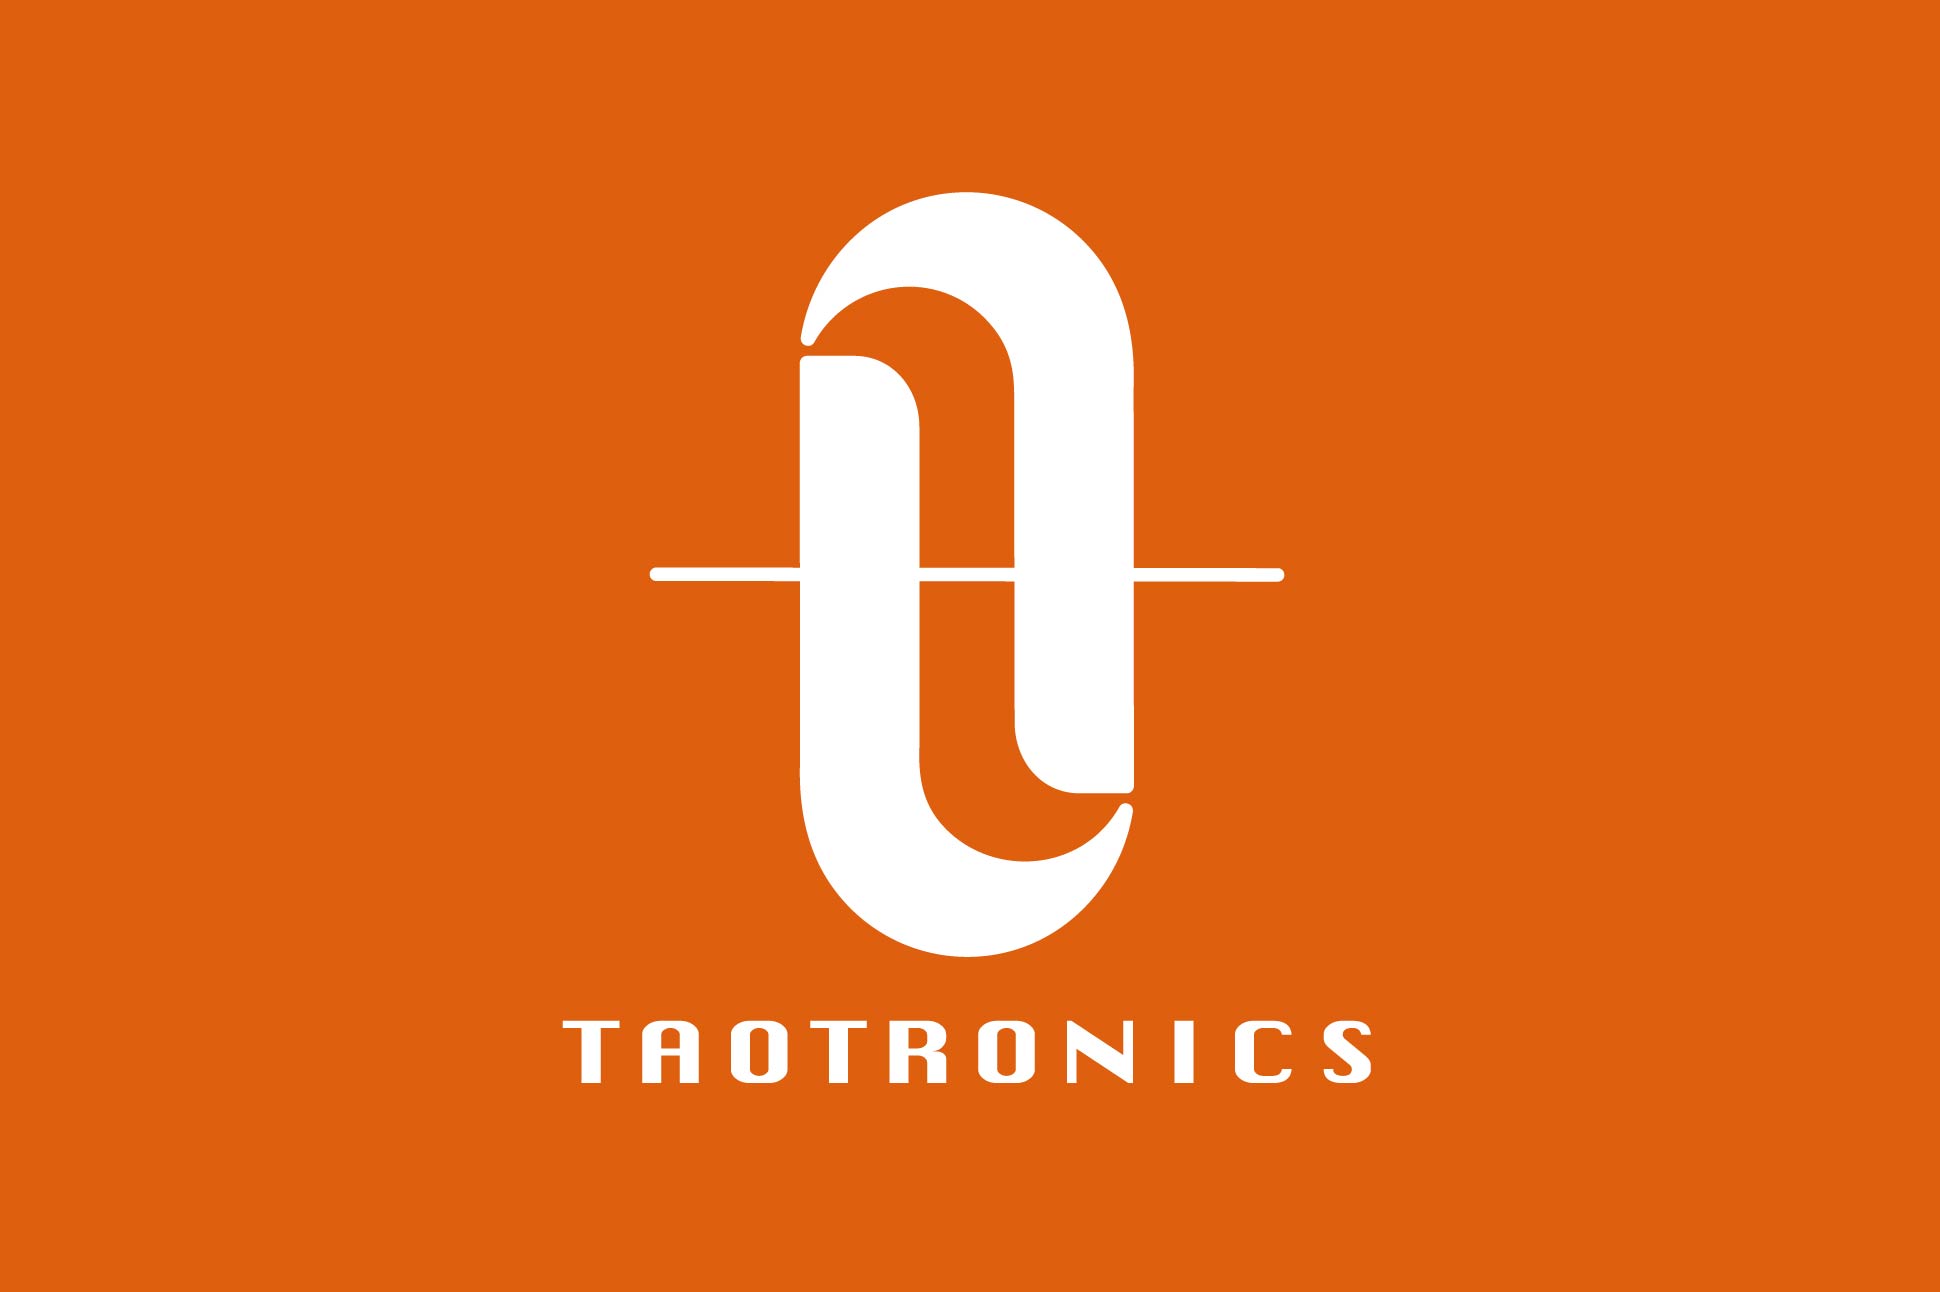 【TaoTronics】完全ワイヤレス未発表モデルを世界初公開